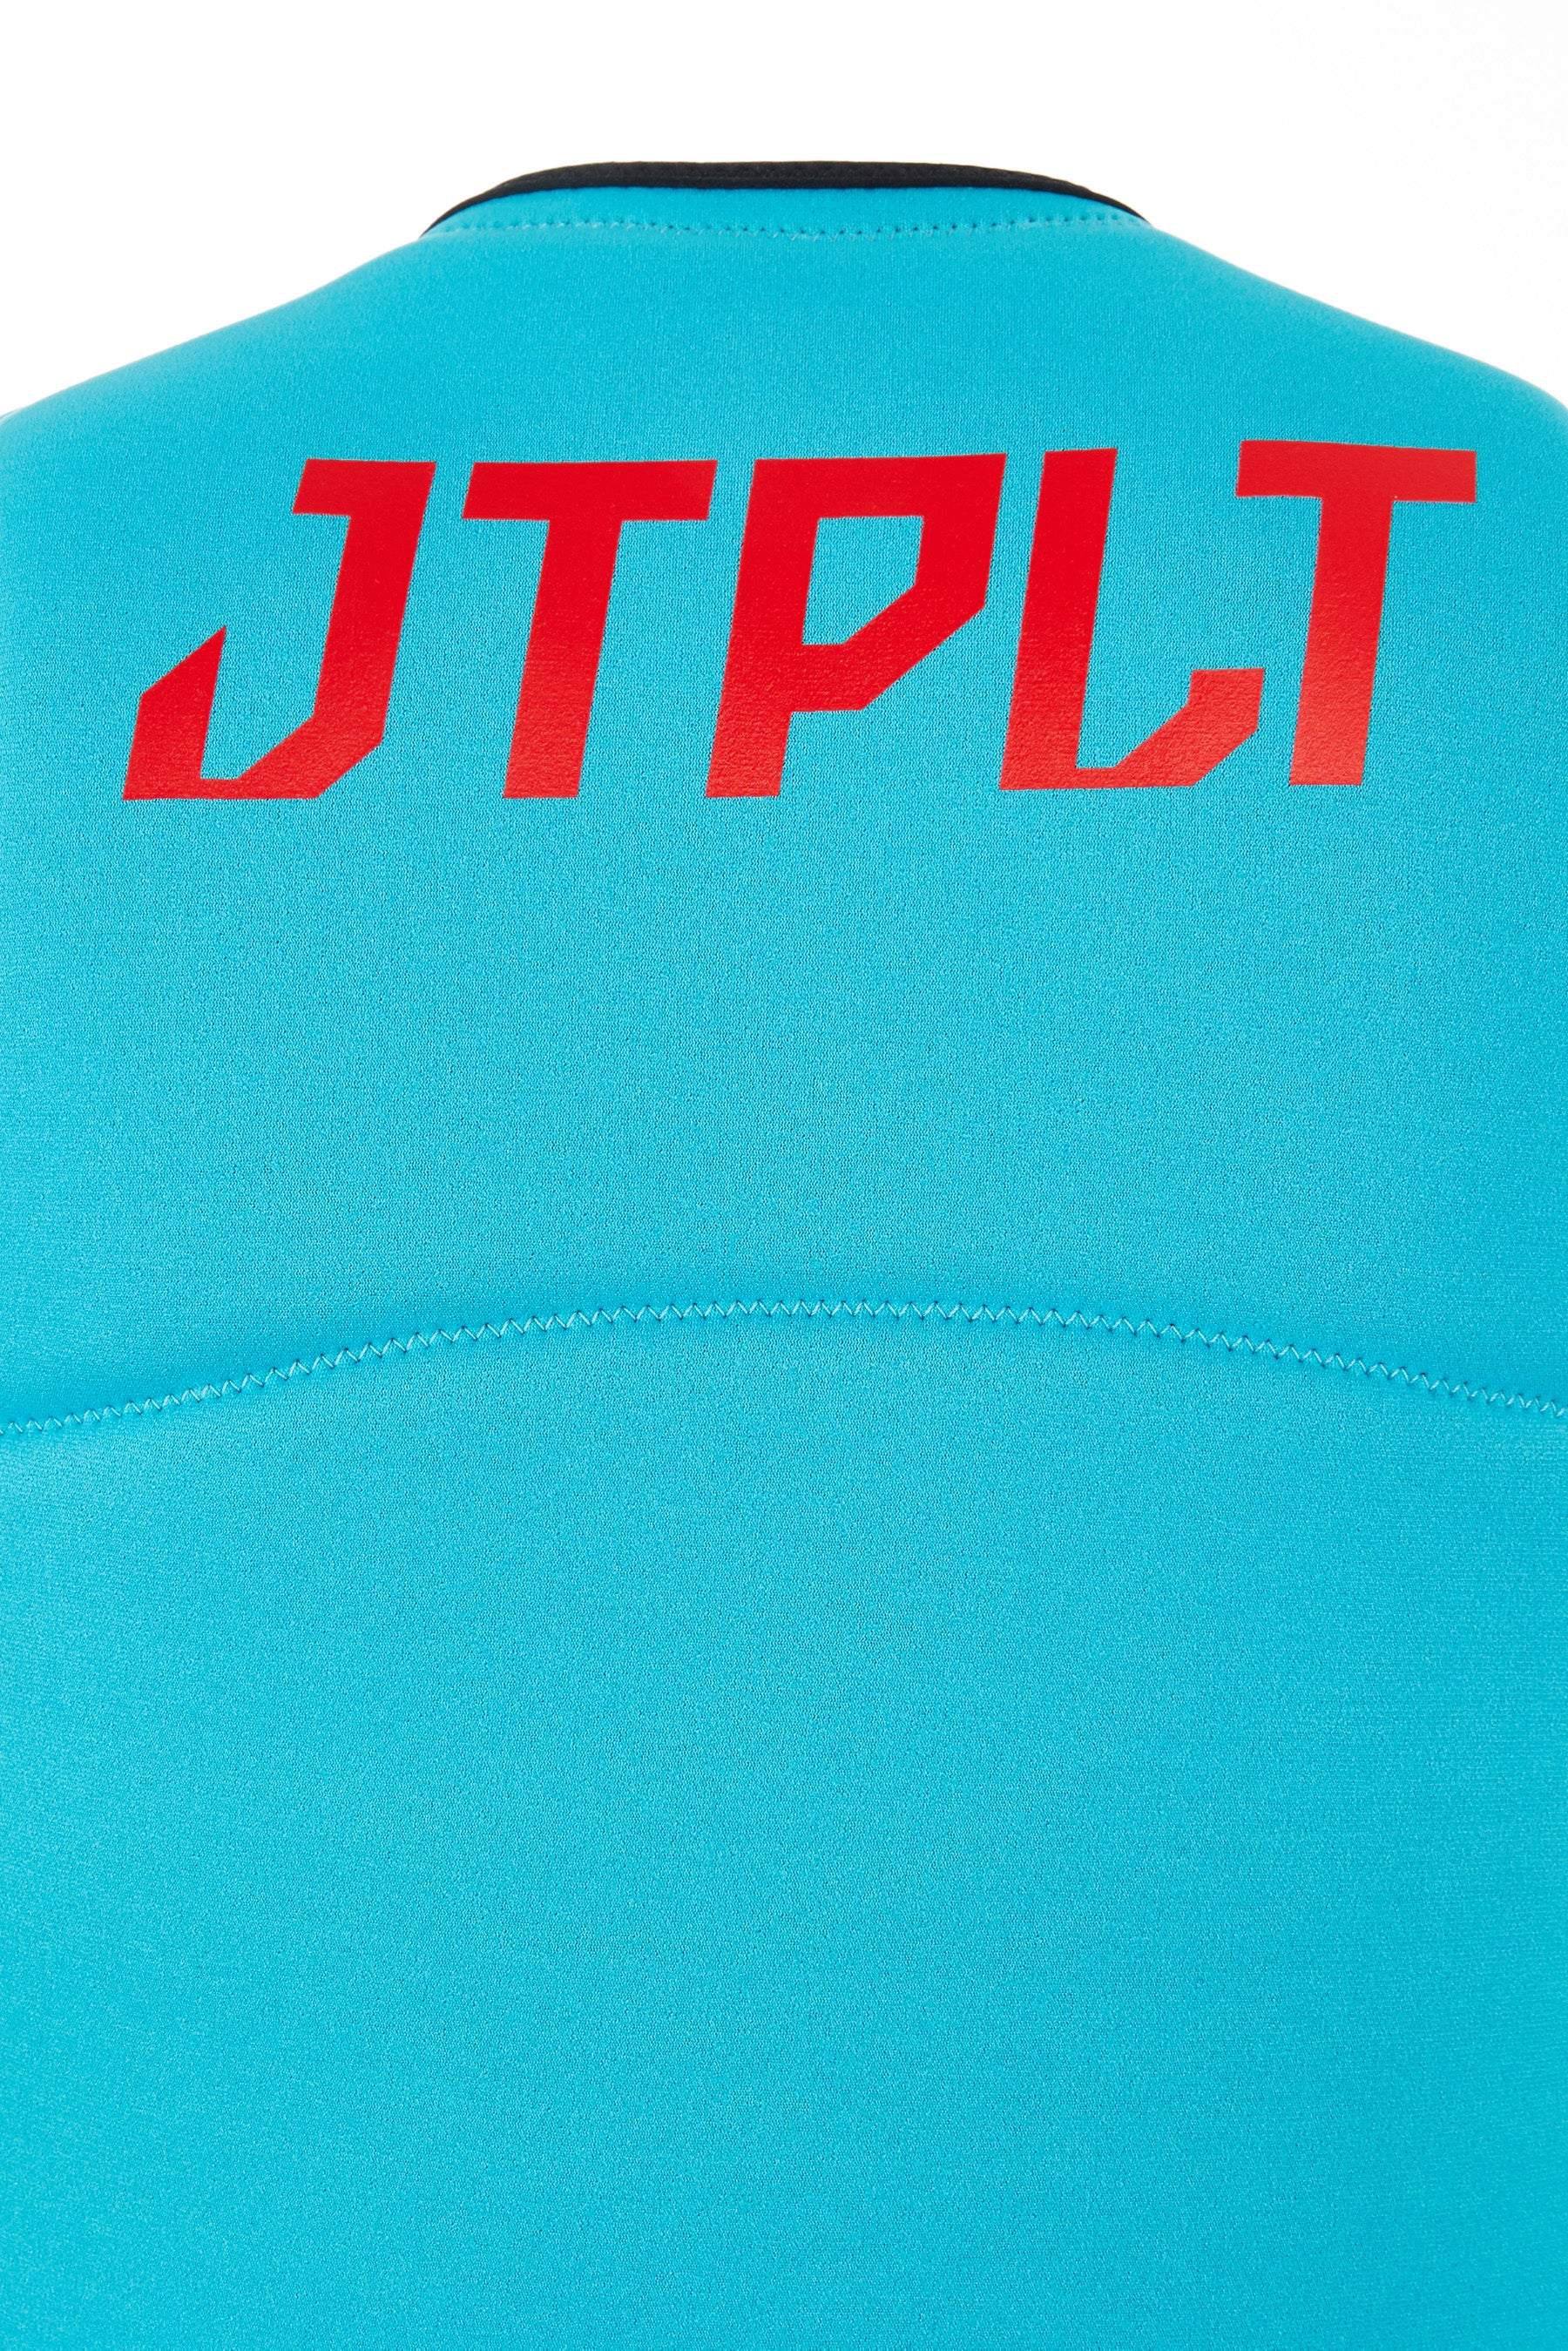 Jetpilot Rx Vault Mens Life Jacket - Blue 4